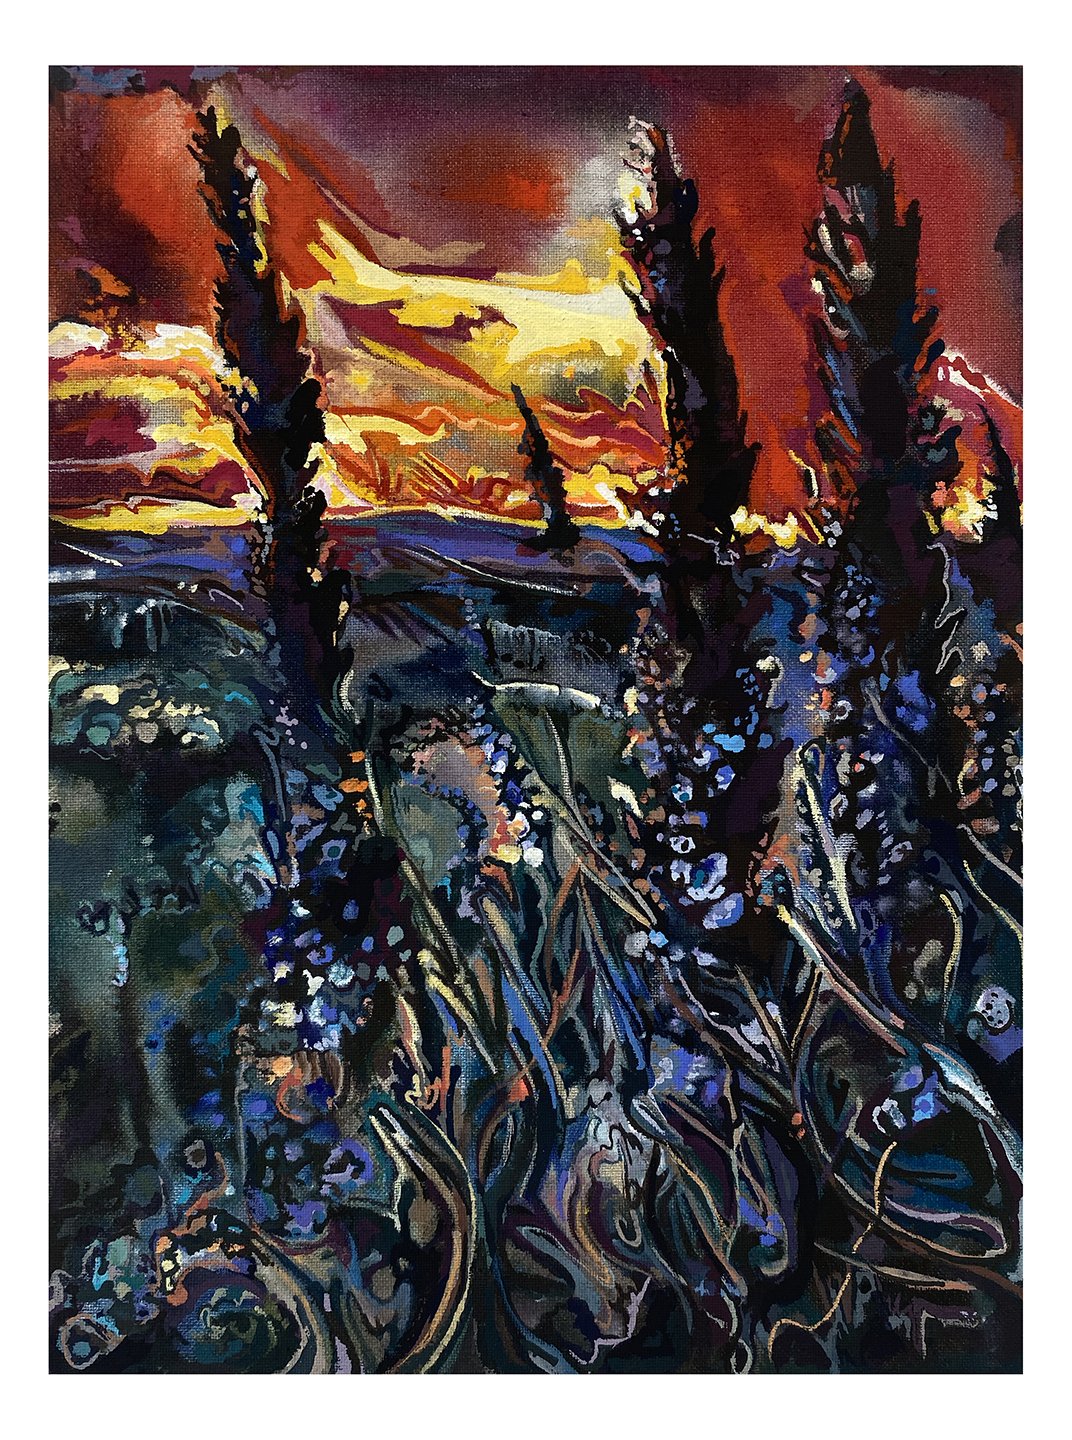  Maria Calandra, Sunset Outside of Arezzo, 2021, acrylic on linen, 10 x 8 inches 